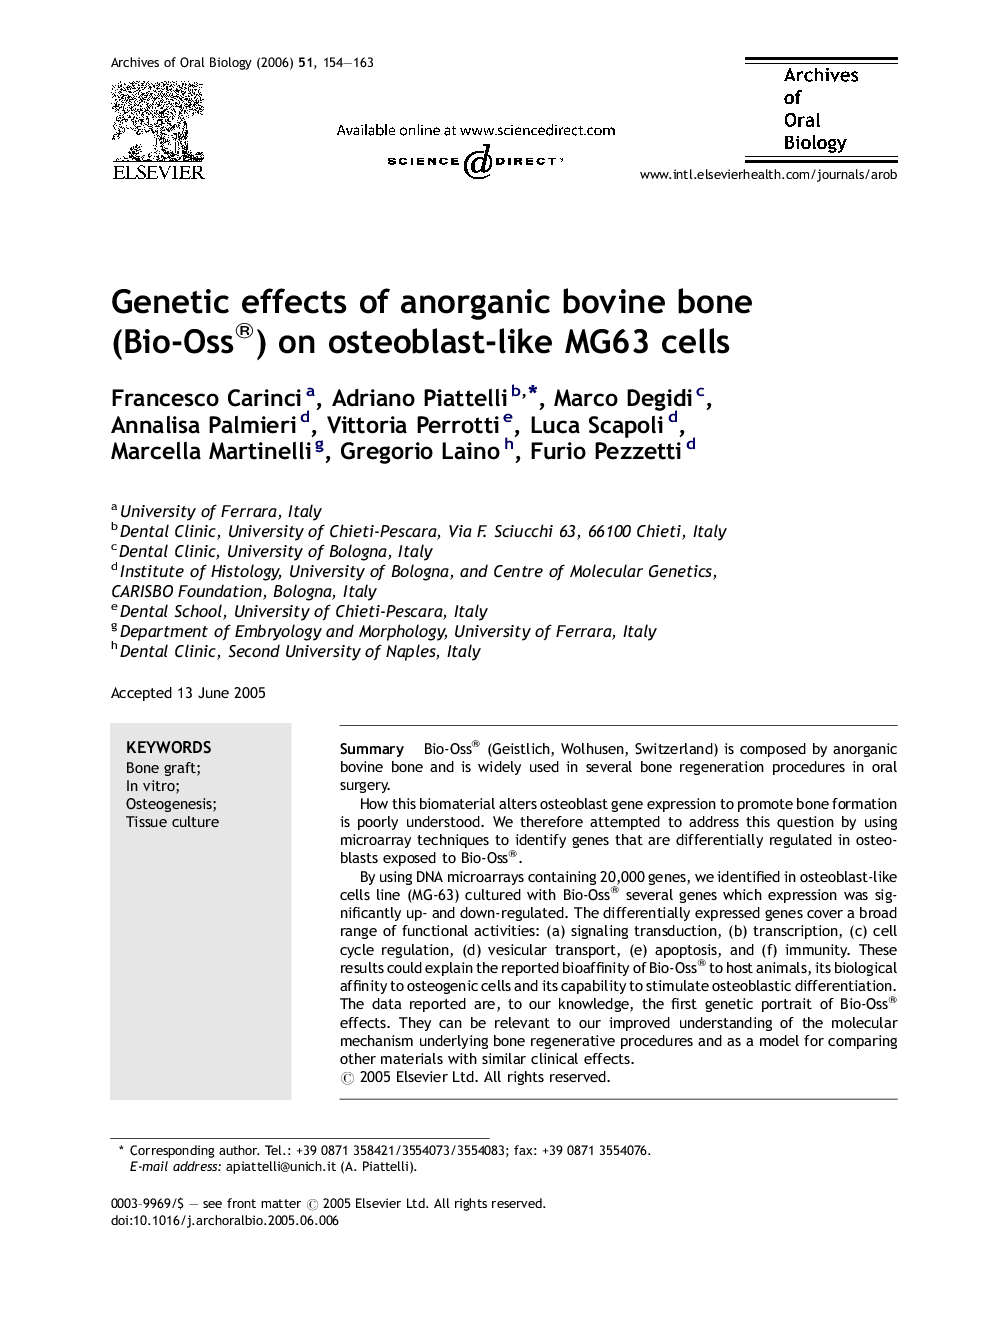 Genetic effects of anorganic bovine bone (Bio-Oss®) on osteoblast-like MG63 cells